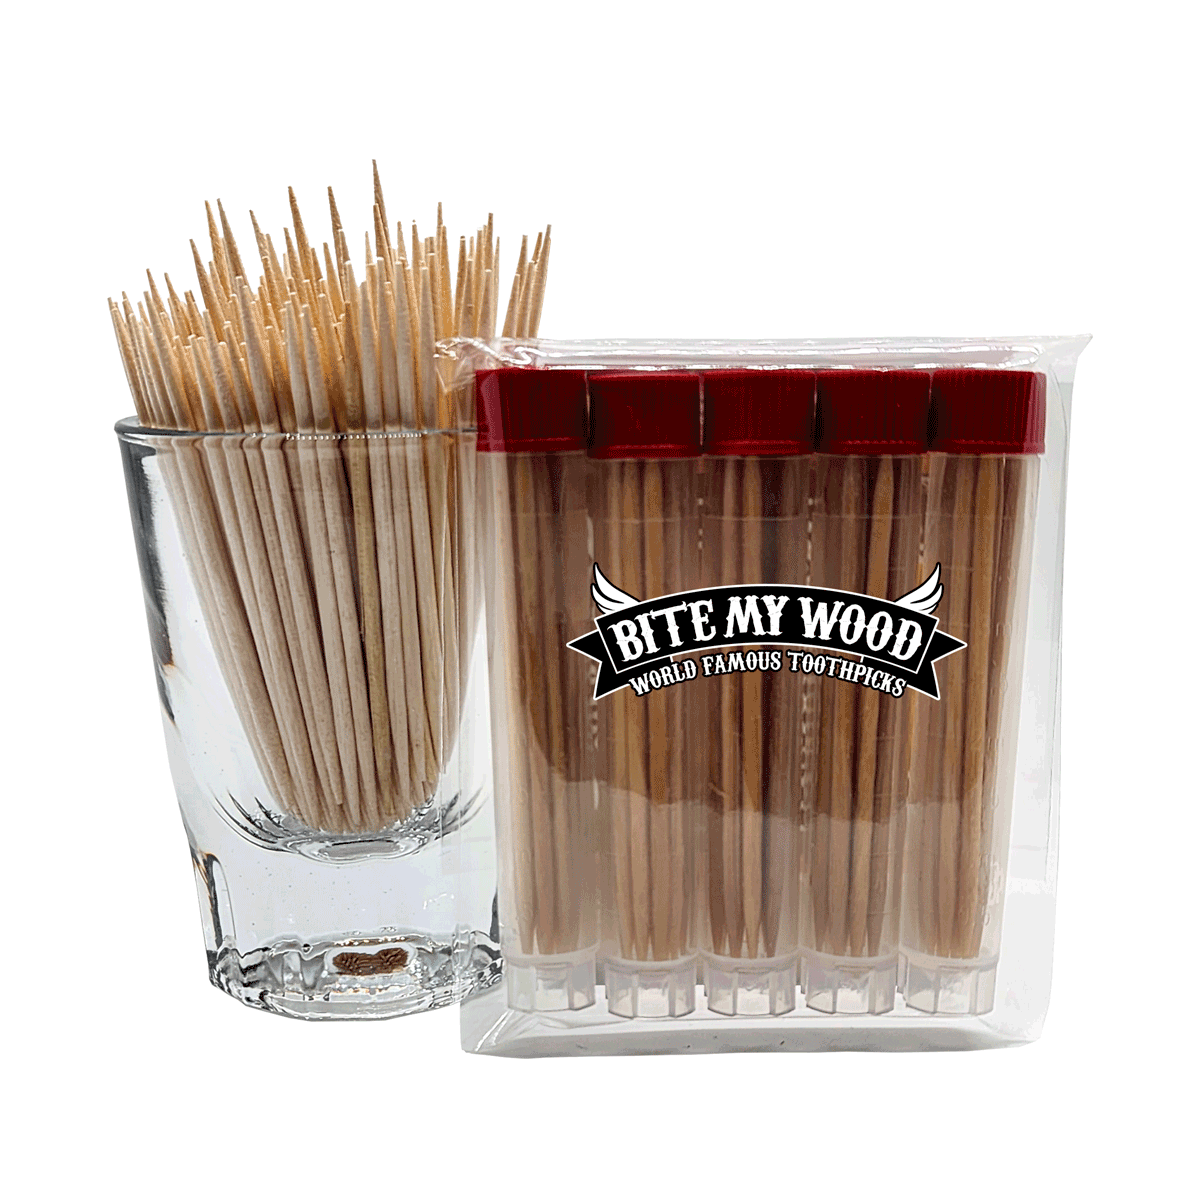 BiteMyWood 5 Pack Flavored Birchwood Toothpicks Ultimate Extreme Hot Cinnamon